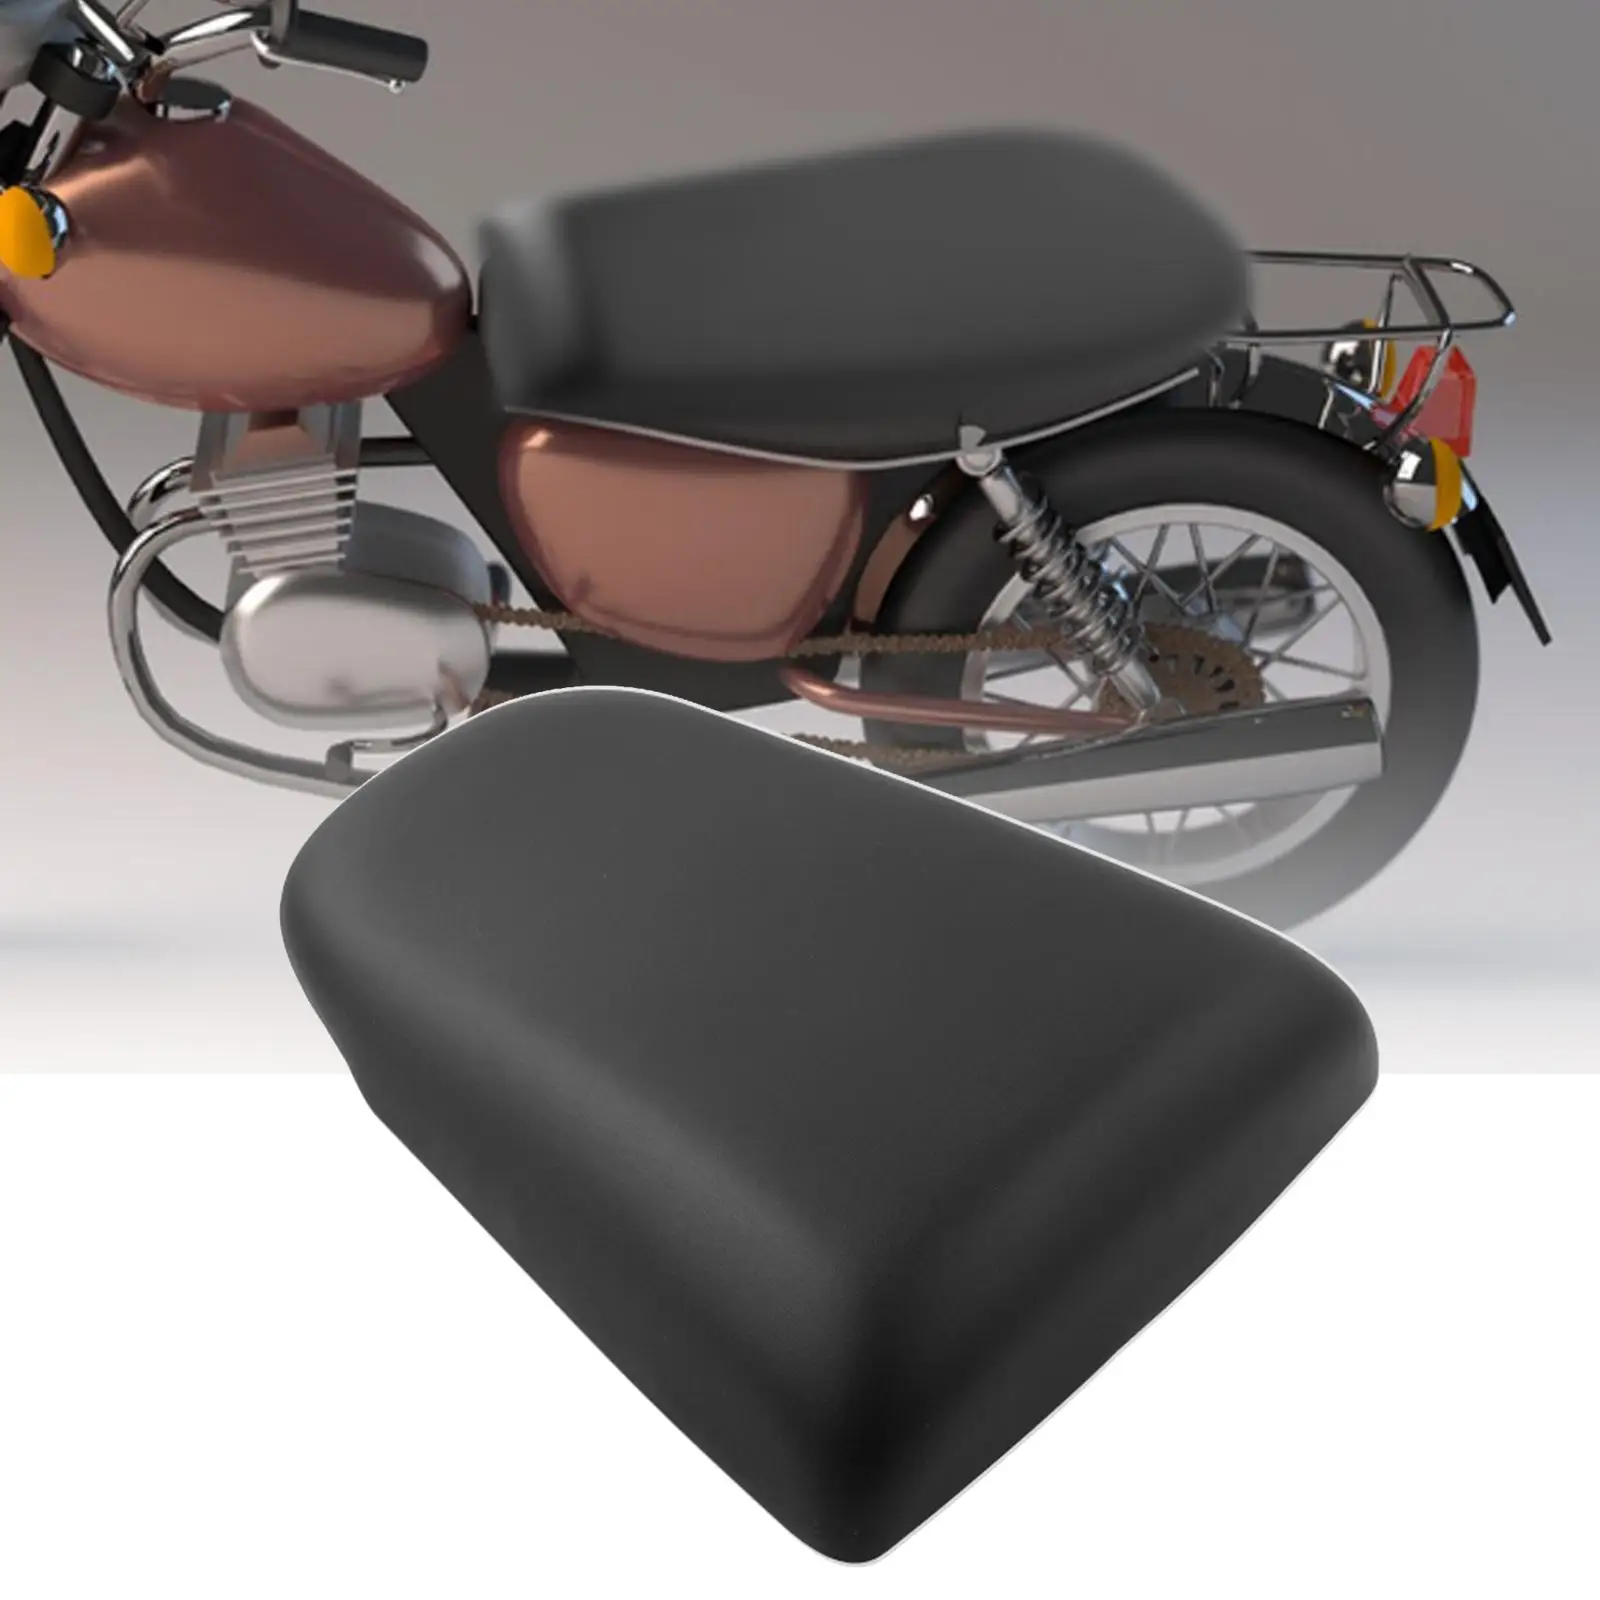 Motorcycle Passenger Seat Cushion Spare Parts Practical for Suzuki 2003 to 2007 Sv1000 Convenient Installation Reusable Premium